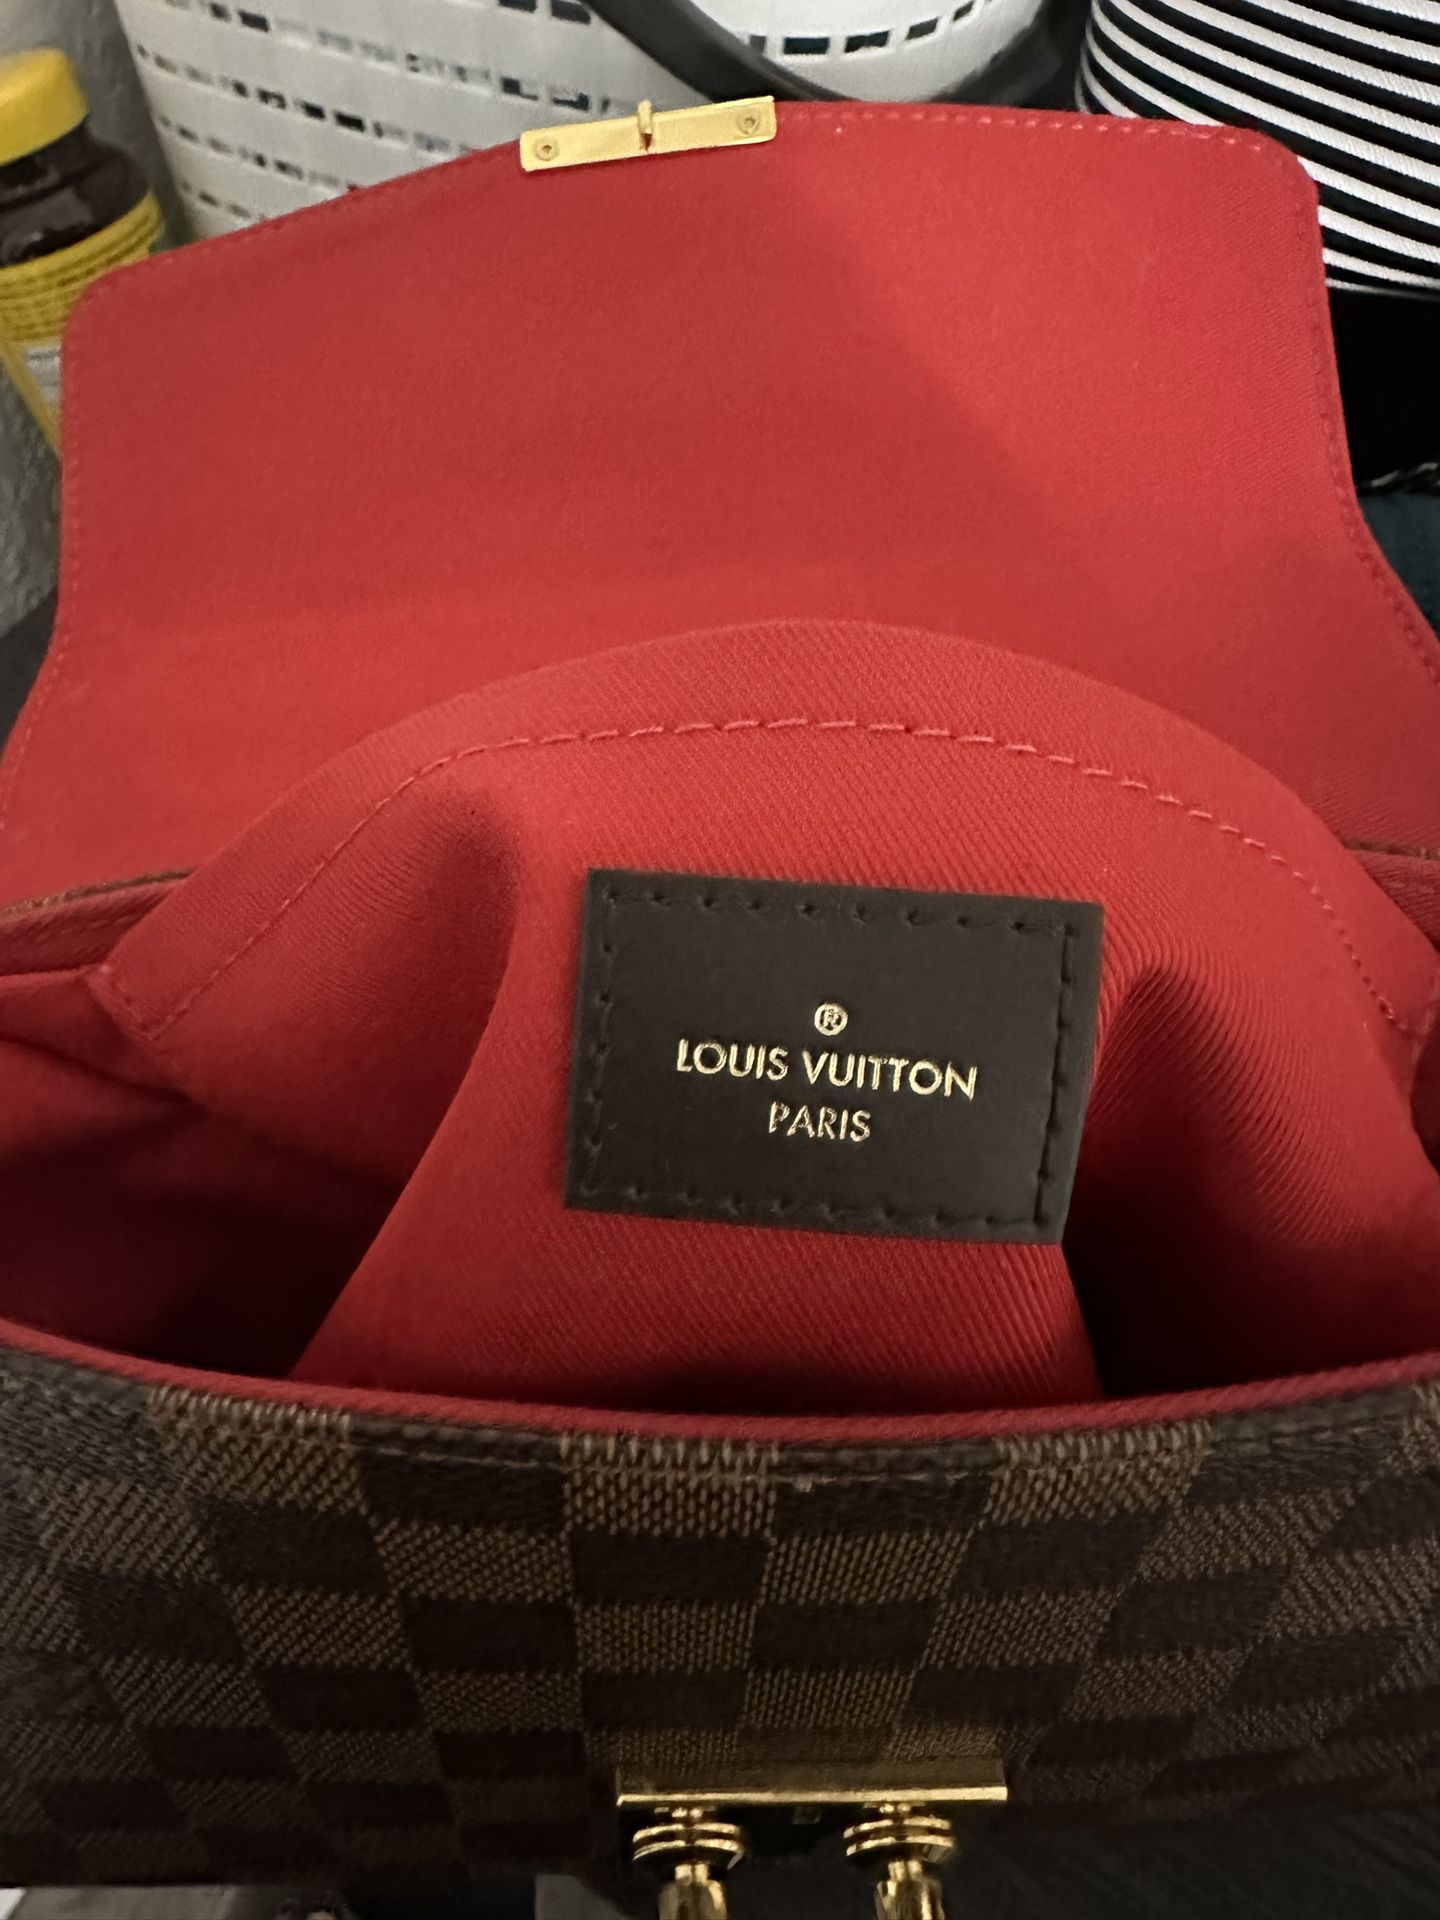 Real Authentic Louis Vuitton Bag 